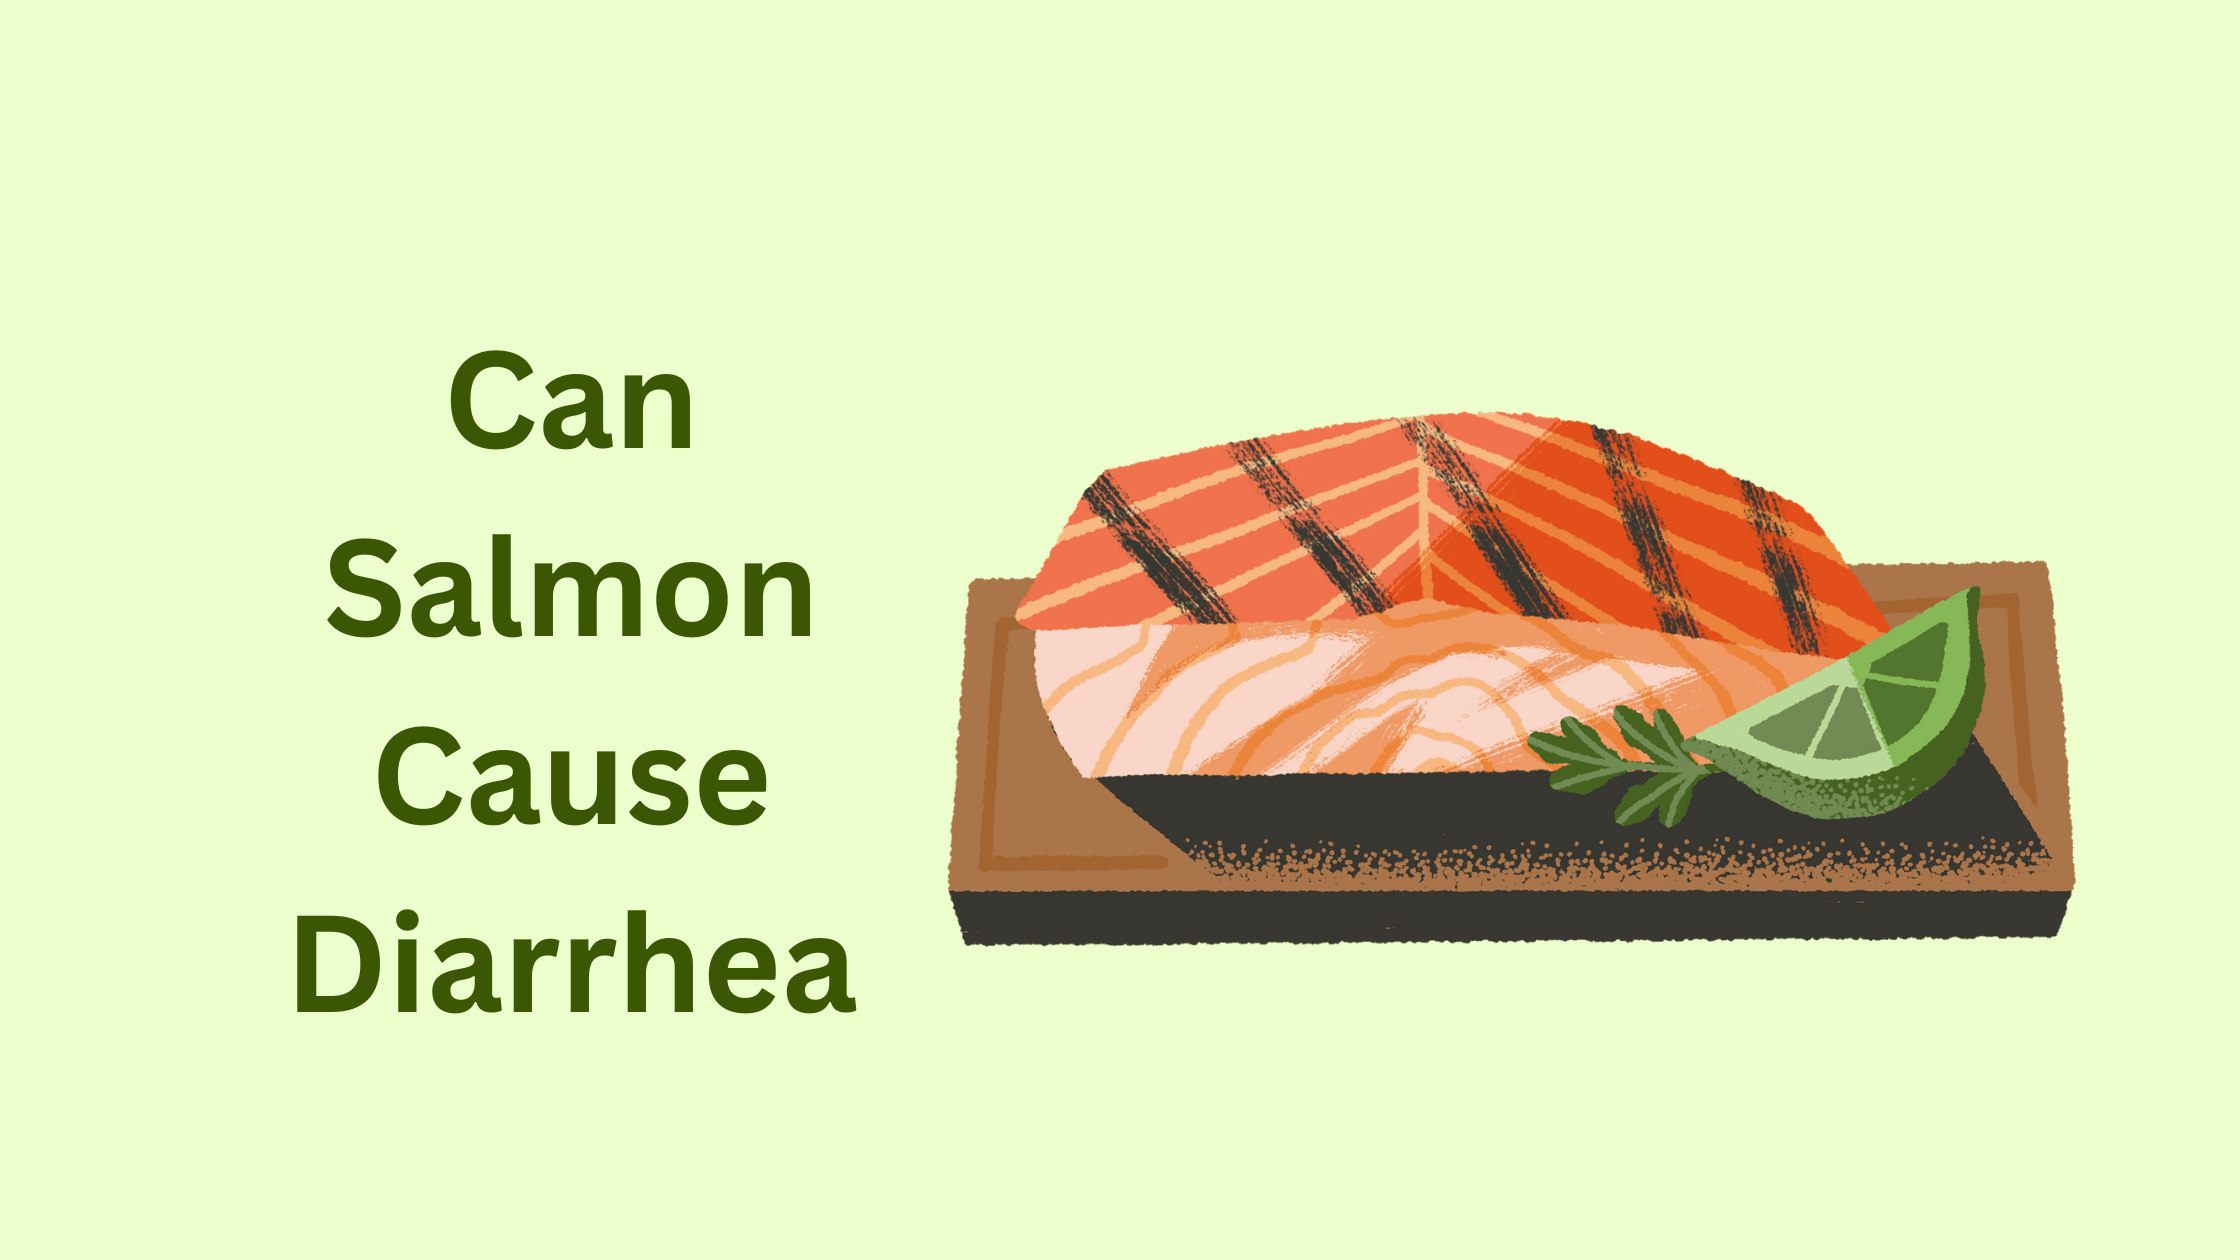 diarrhea from salmon